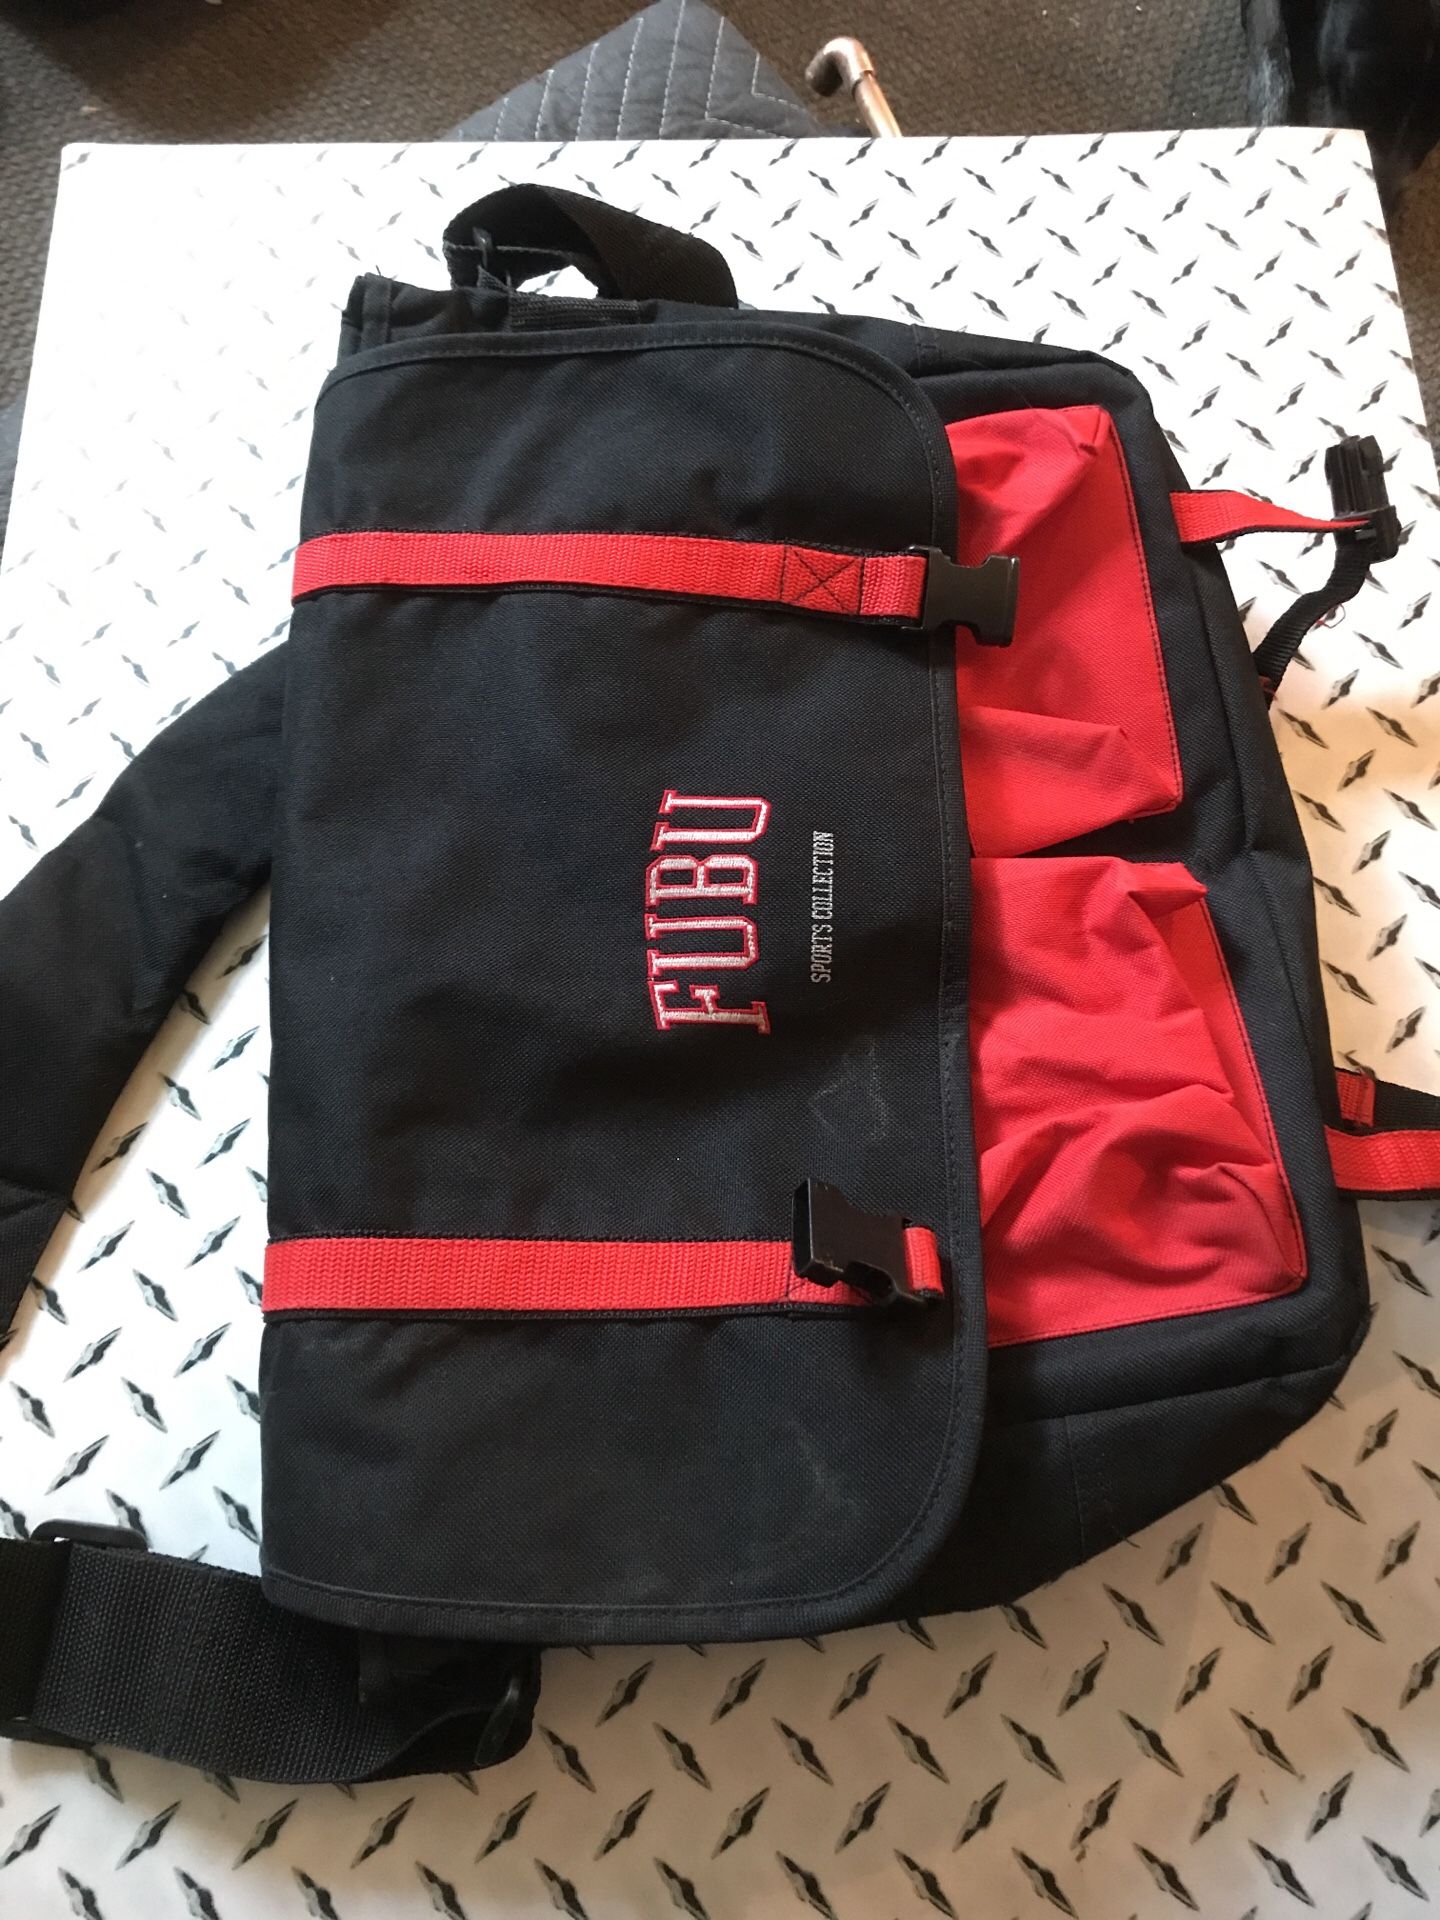 FUBU messenger bag